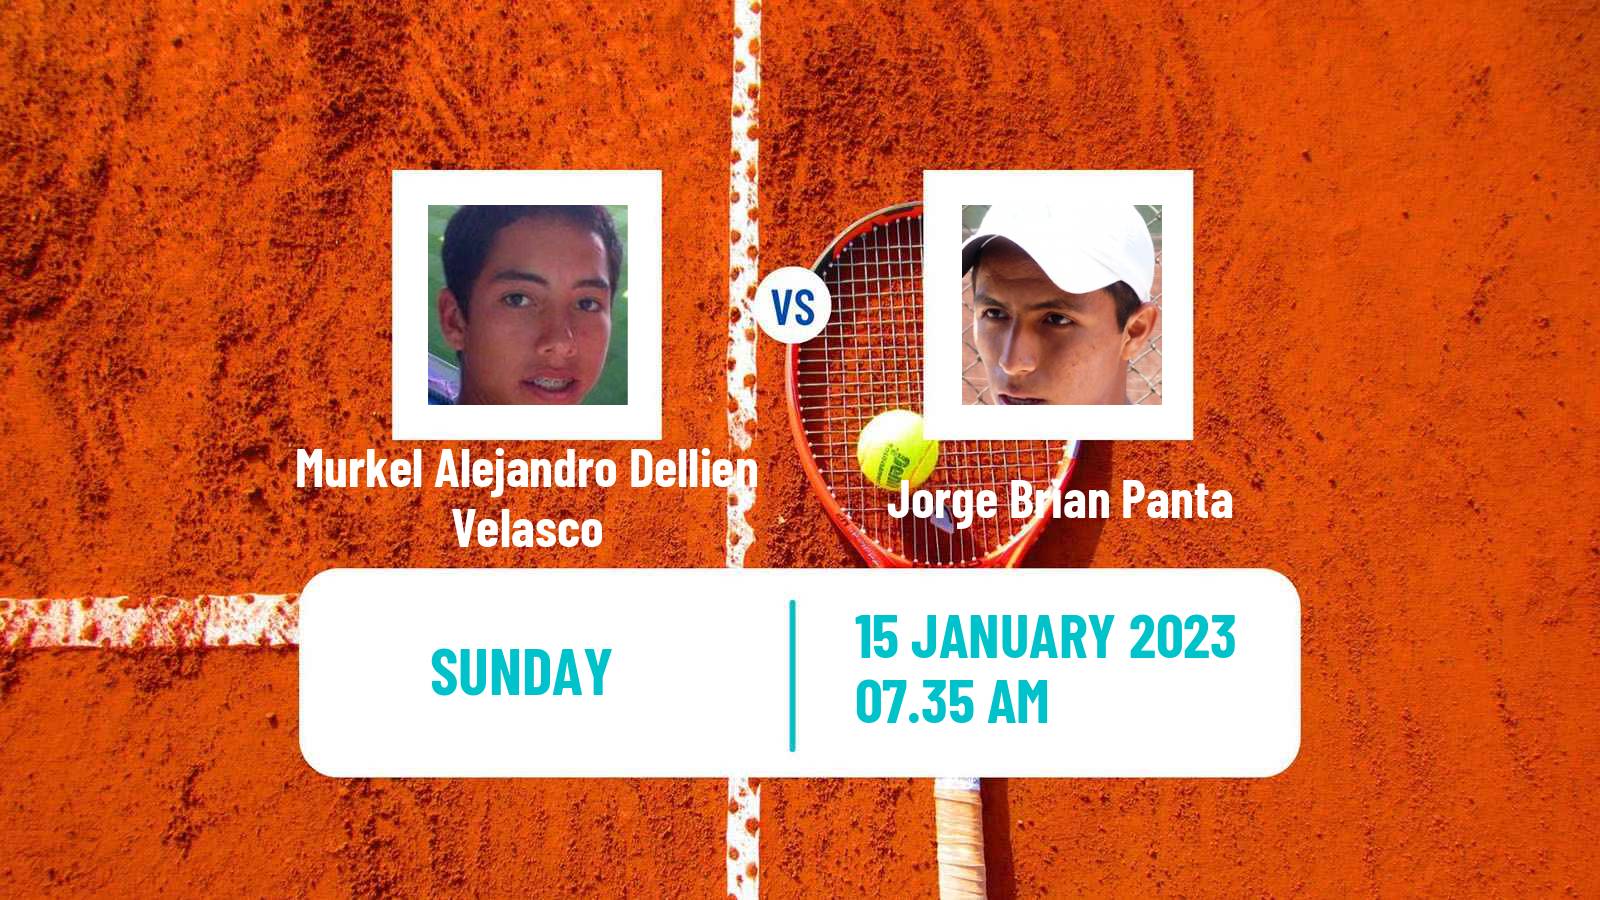 Tennis ATP Challenger Murkel Alejandro Dellien Velasco - Jorge Brian Panta